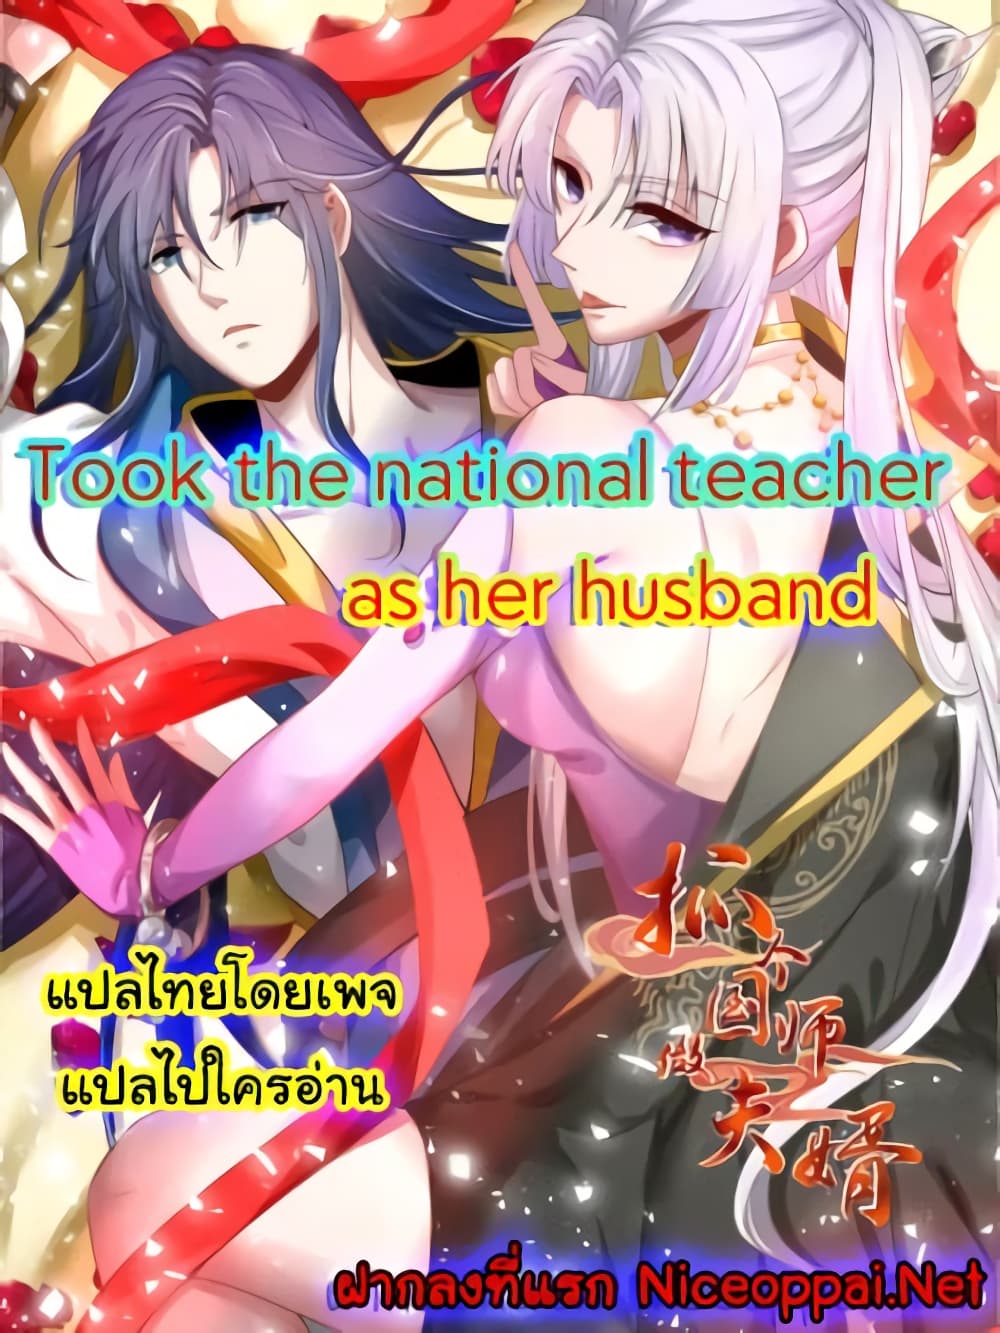 Took the National Teacher as Her Husband 22-22